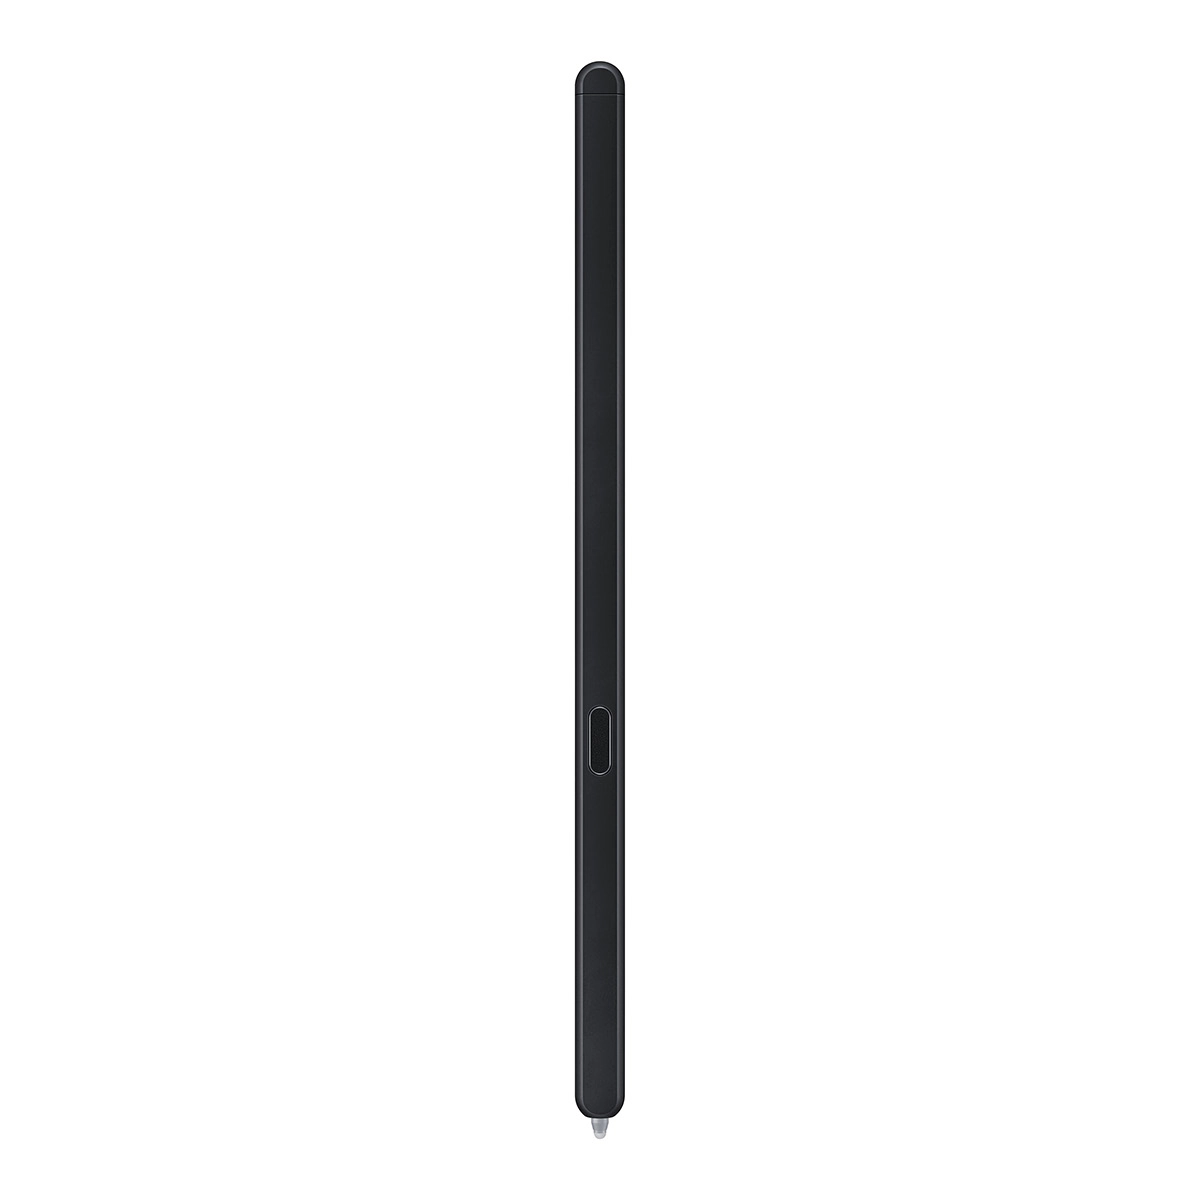 Samsung Galaxy Z Fold 5 S Pen Fold Edition